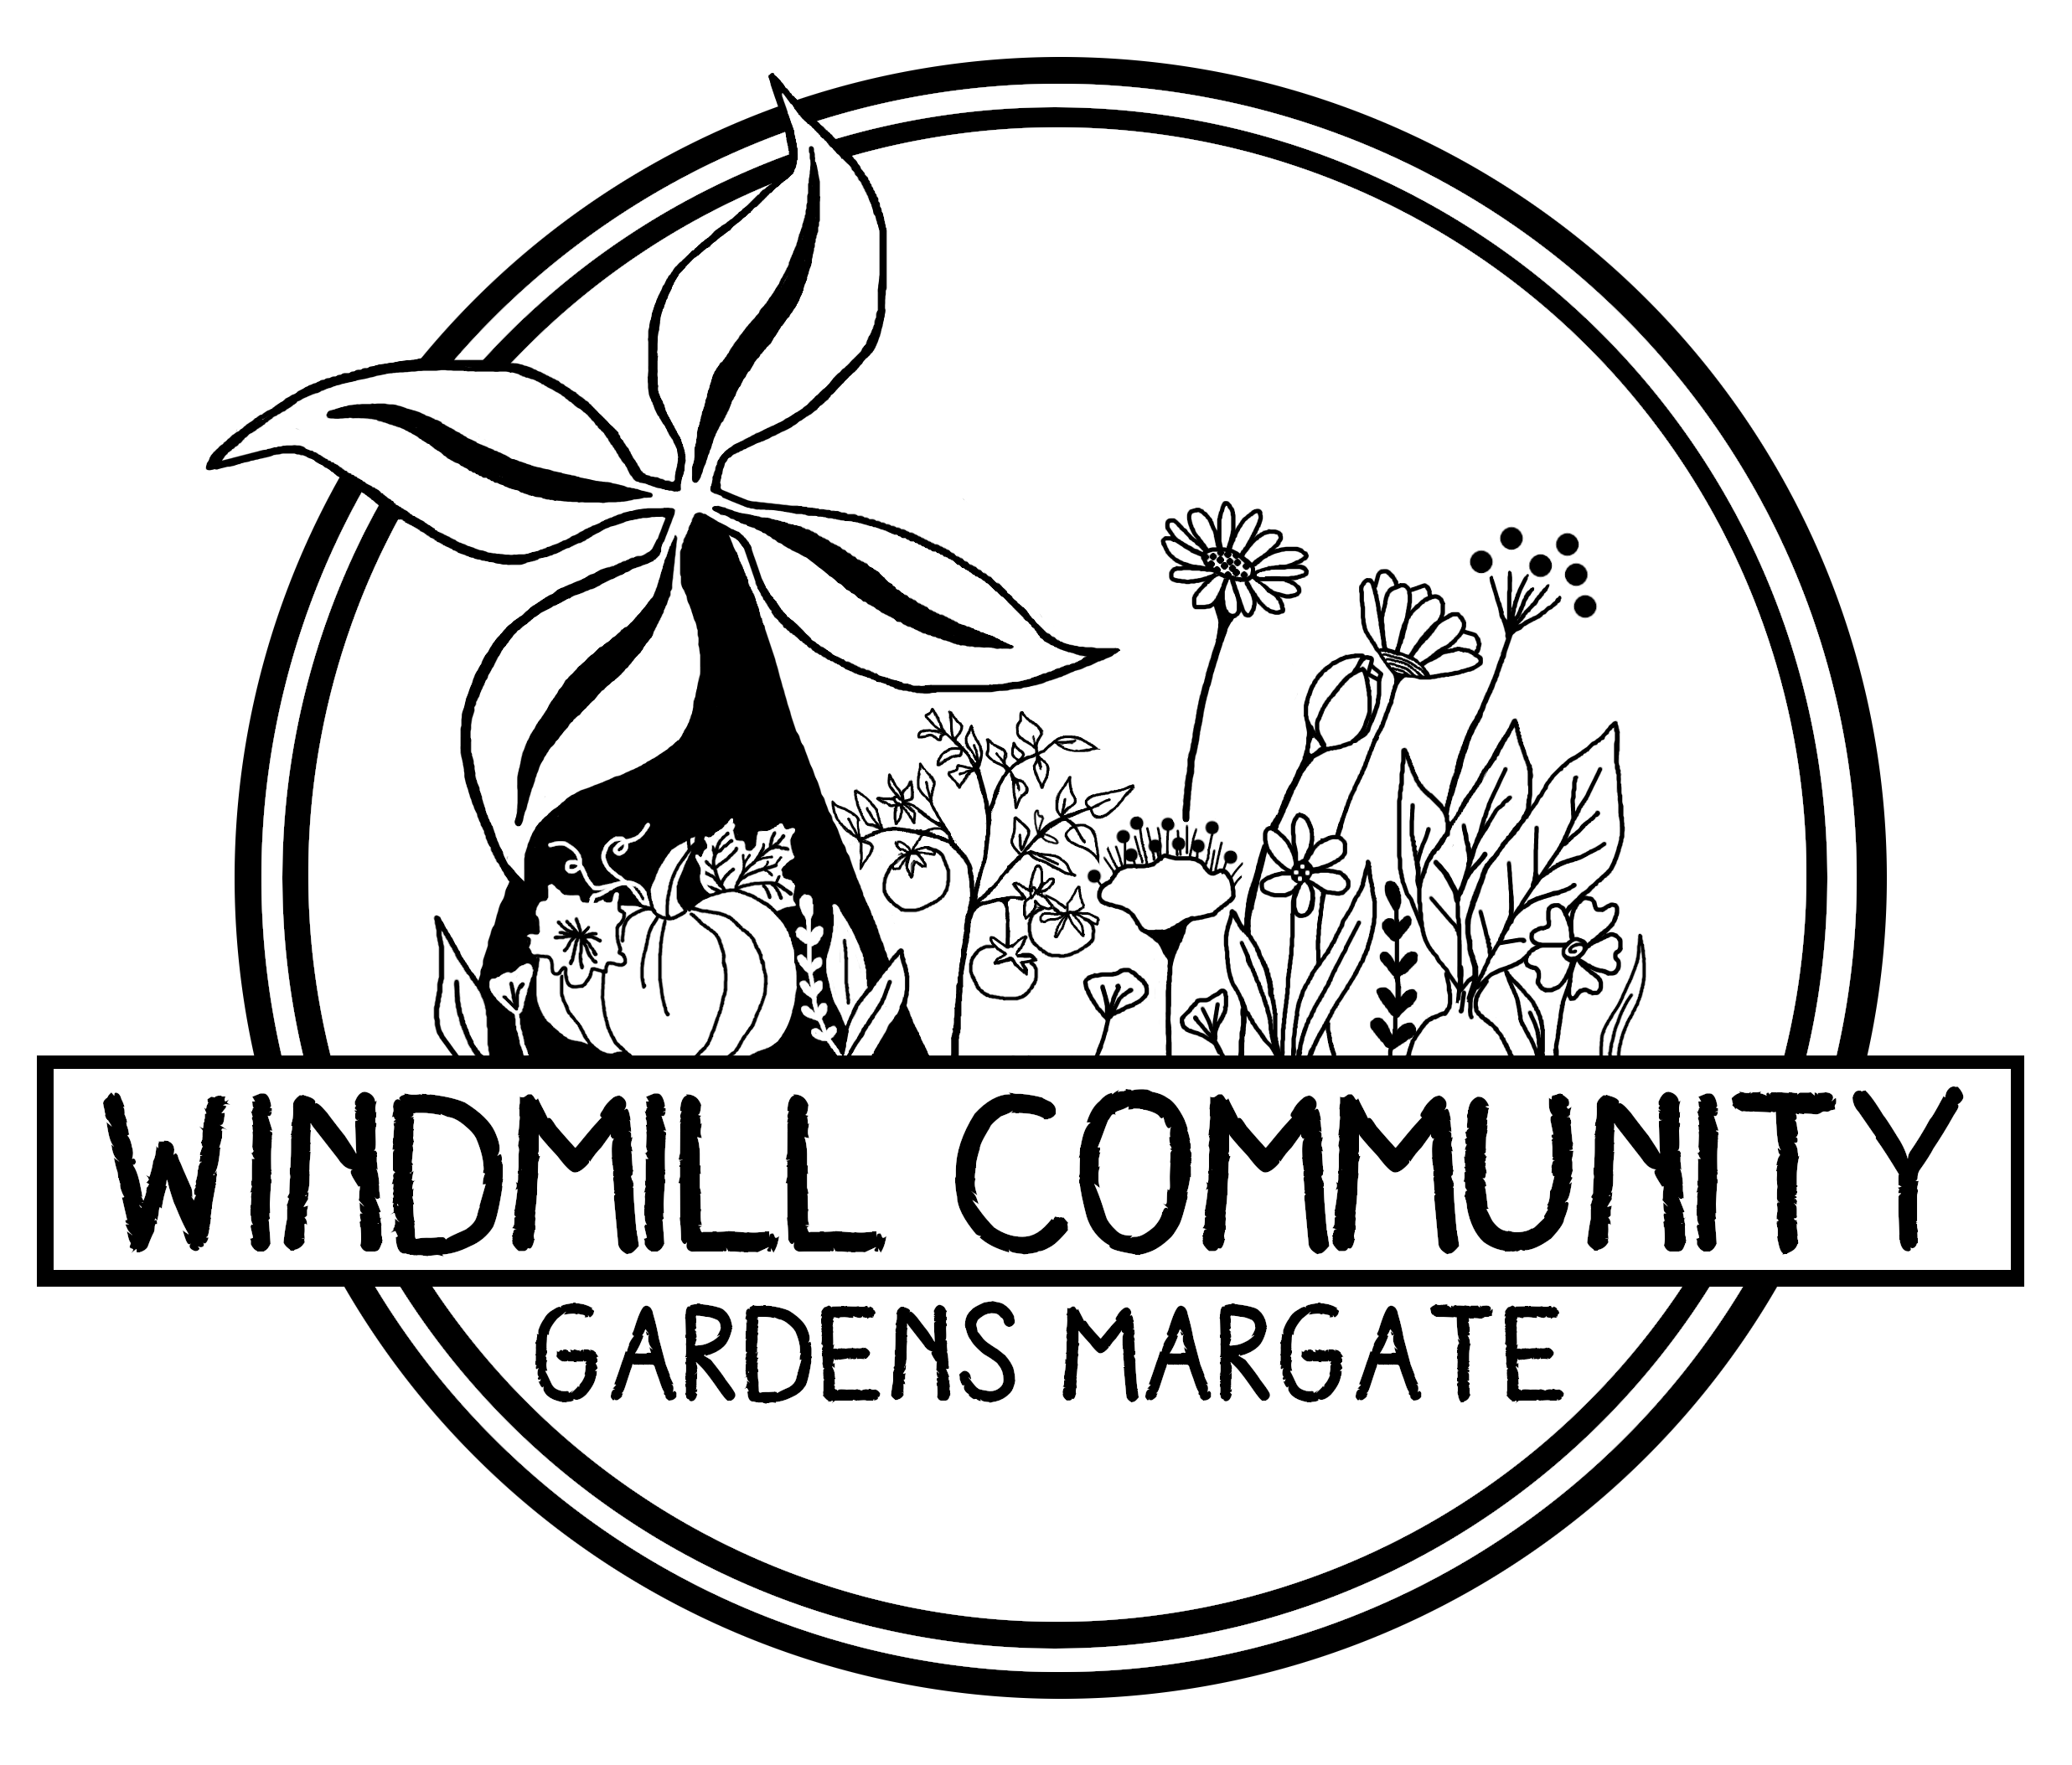 Windmill Community Gardens Margate